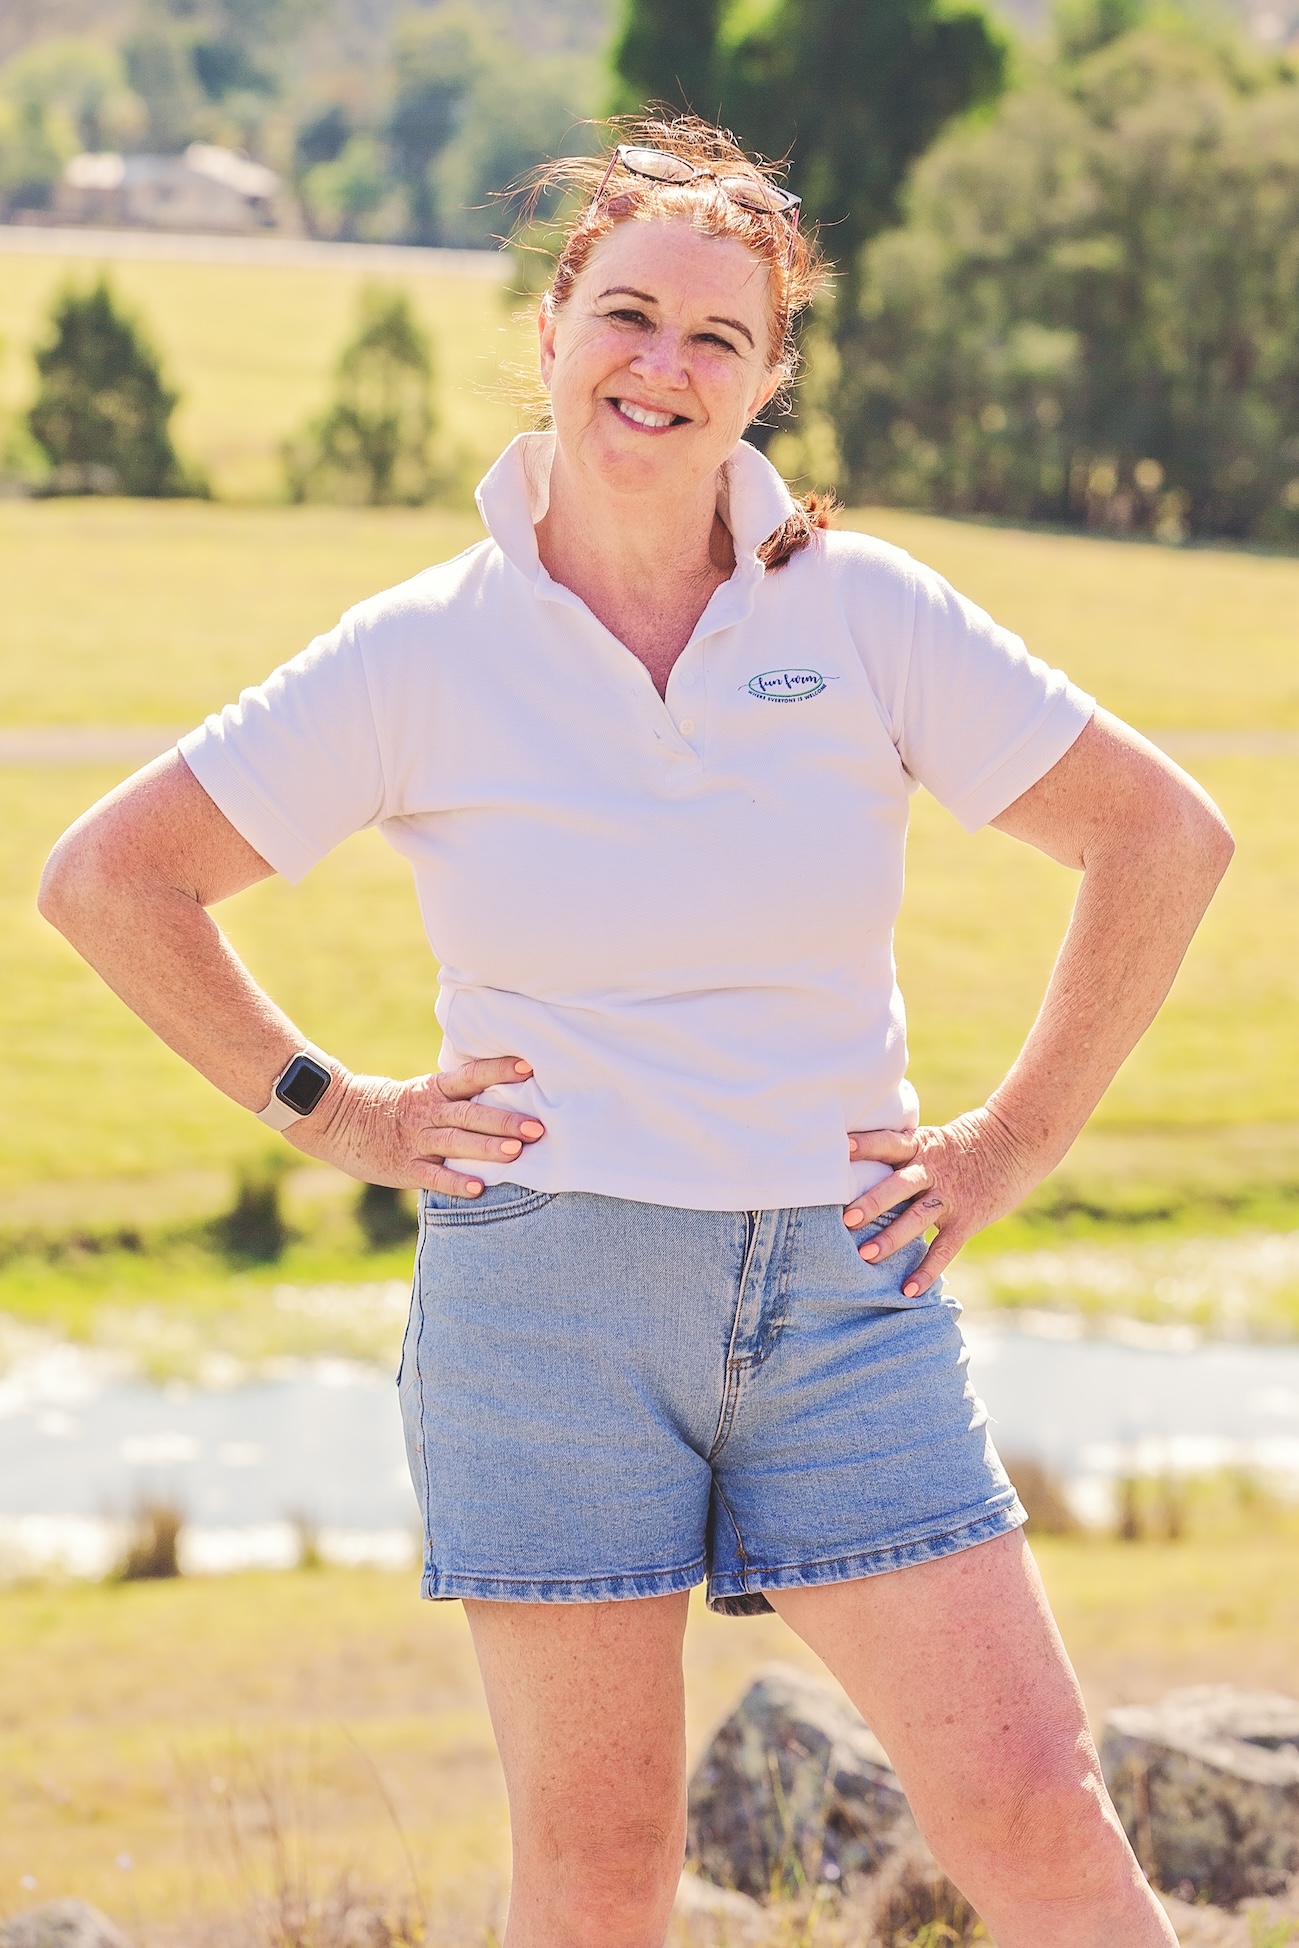 Karen Howe: Director of Fun Farm Limited